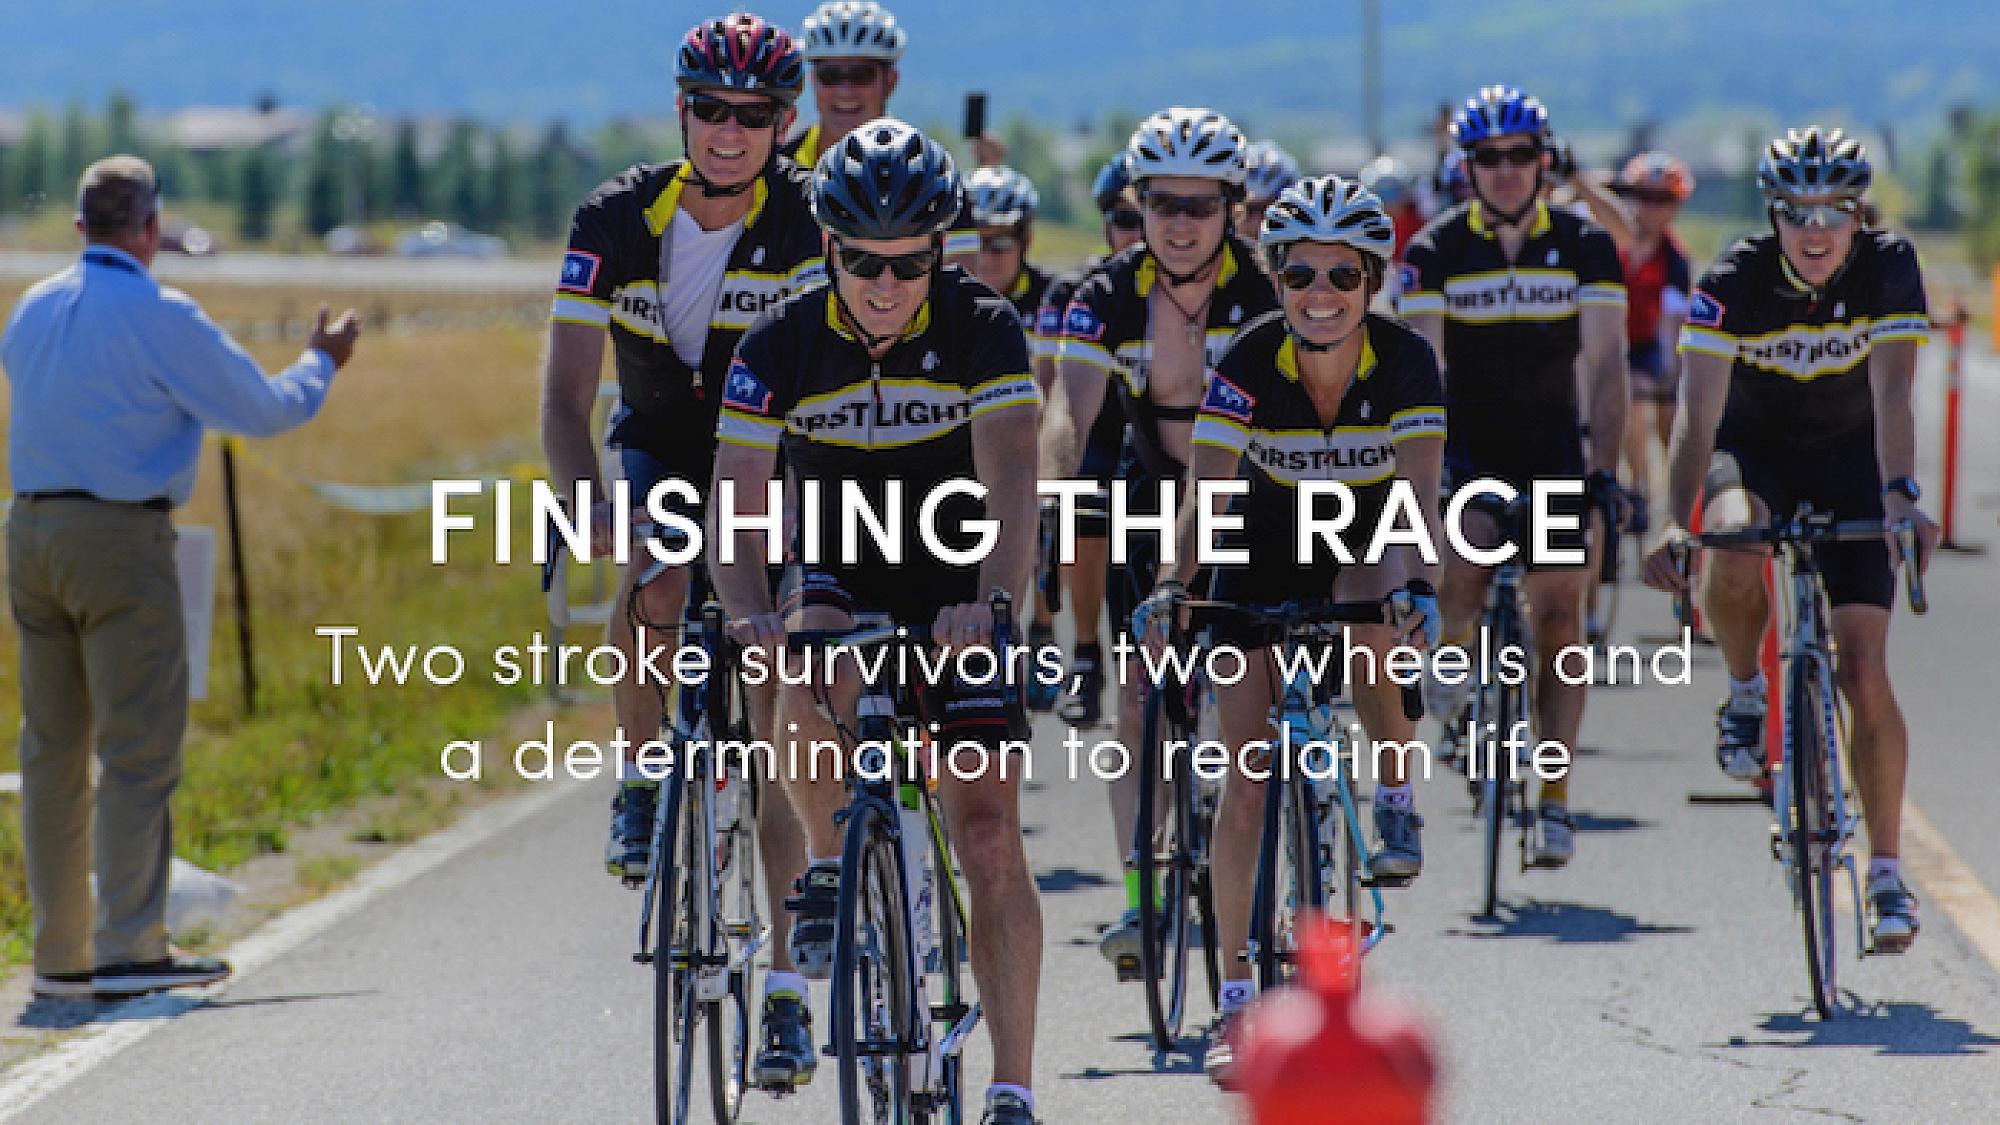 Finishing the Race: Two stroke survivors